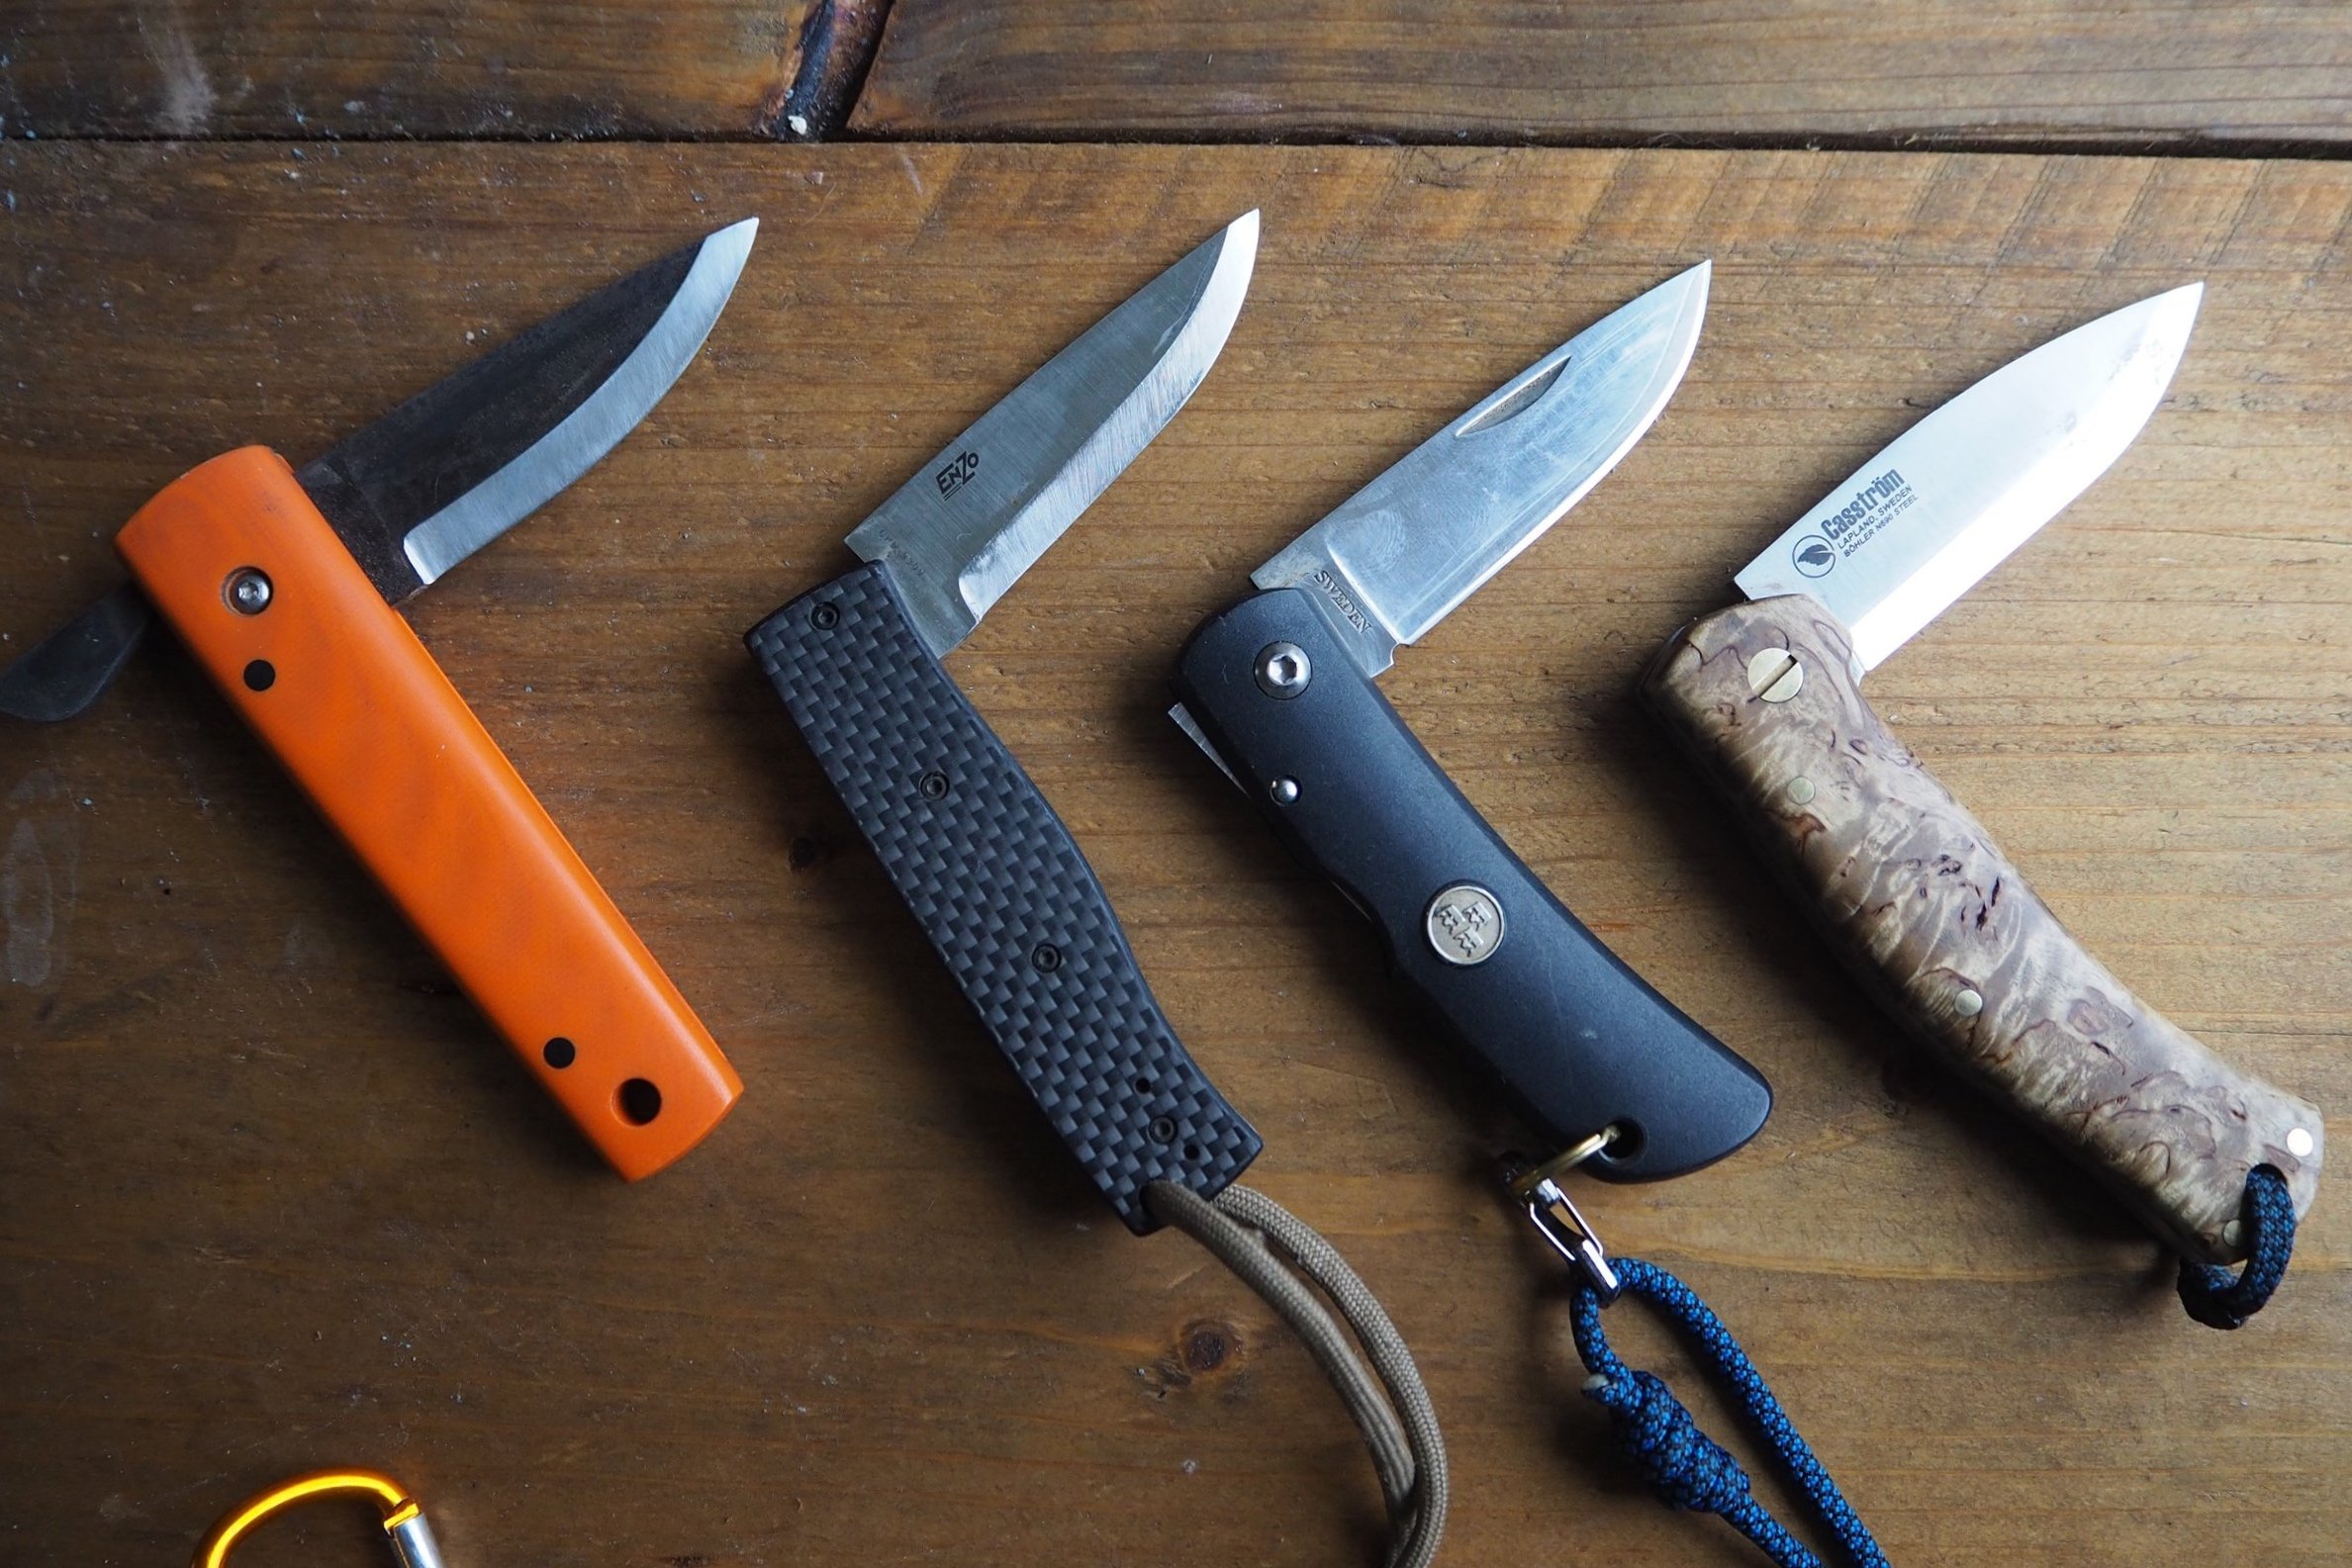 C1 Kid – Whittling Knife for Kids and Beginners